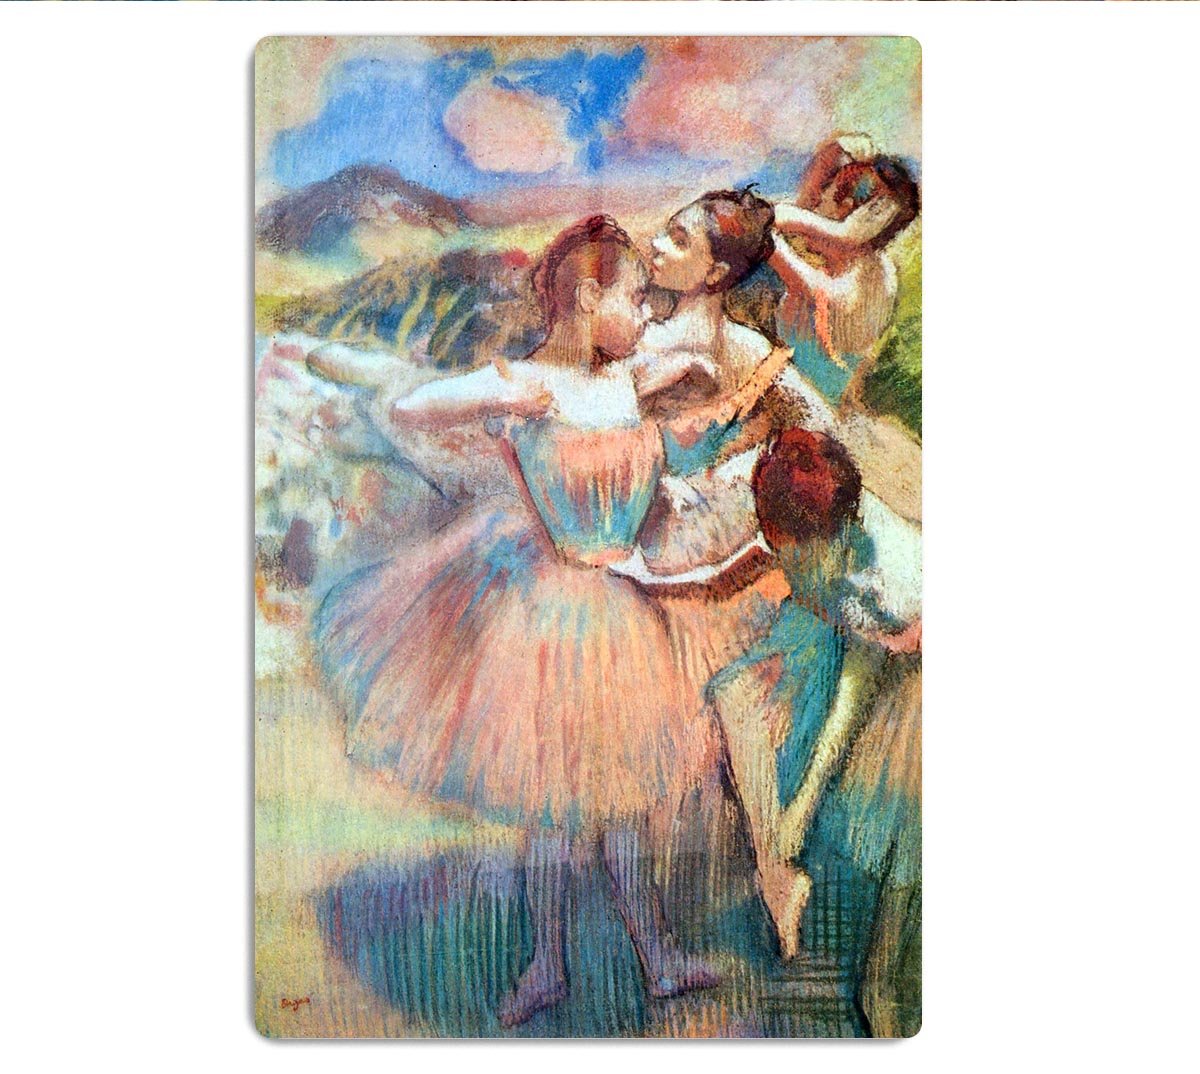 Dancers in the landscape by Degas HD Metal Print - Canvas Art Rocks - 1